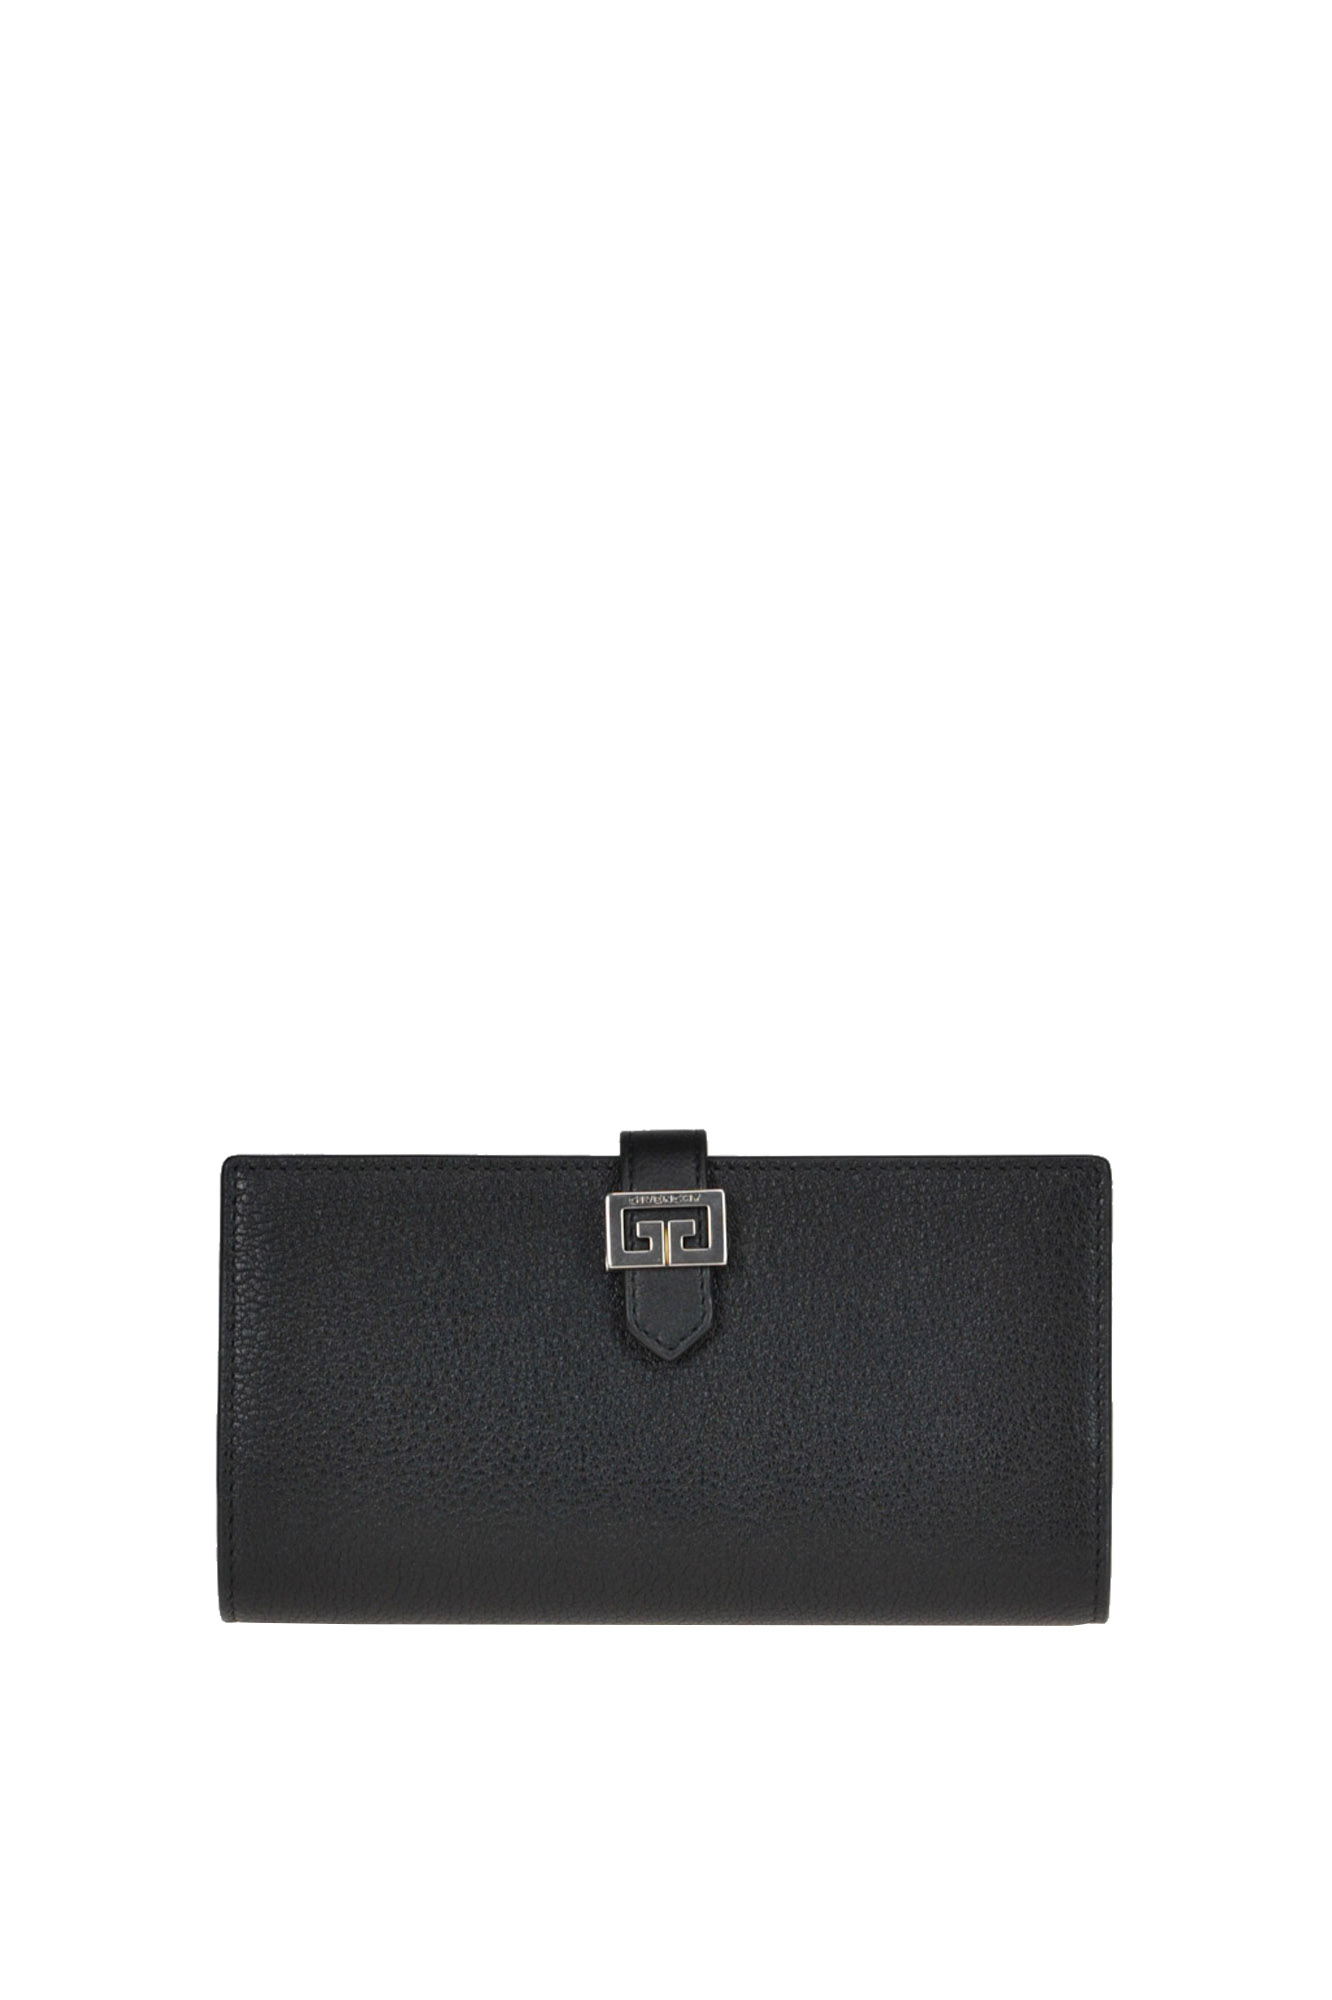 Givenchy Gv3 Lg Bi Leather Wallet In Black